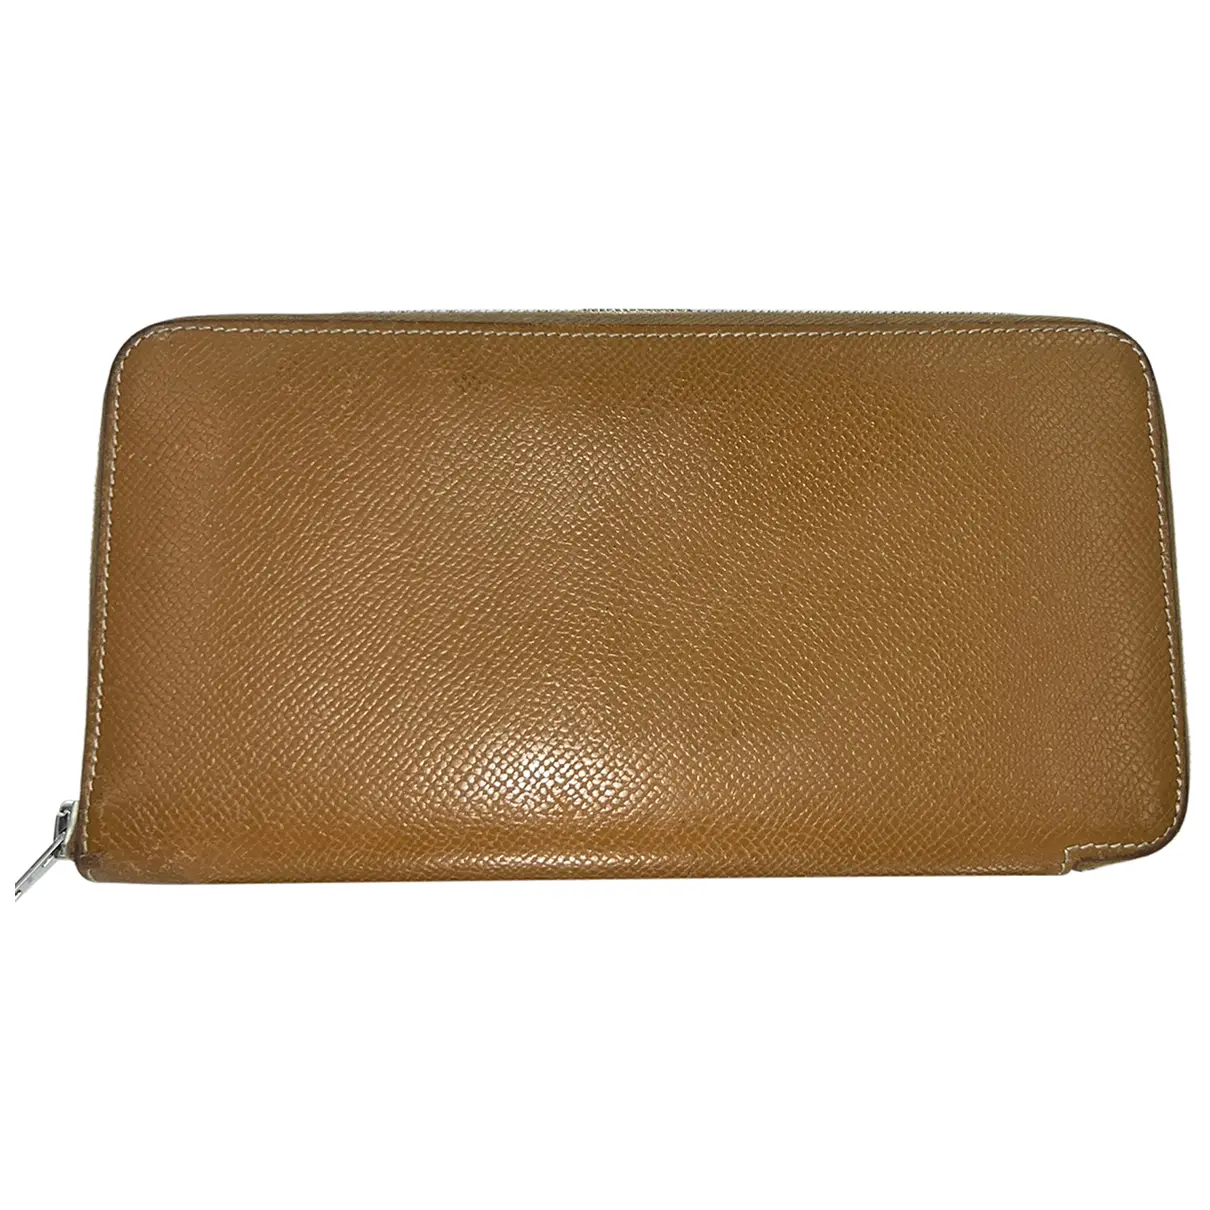 Azap leather wallet